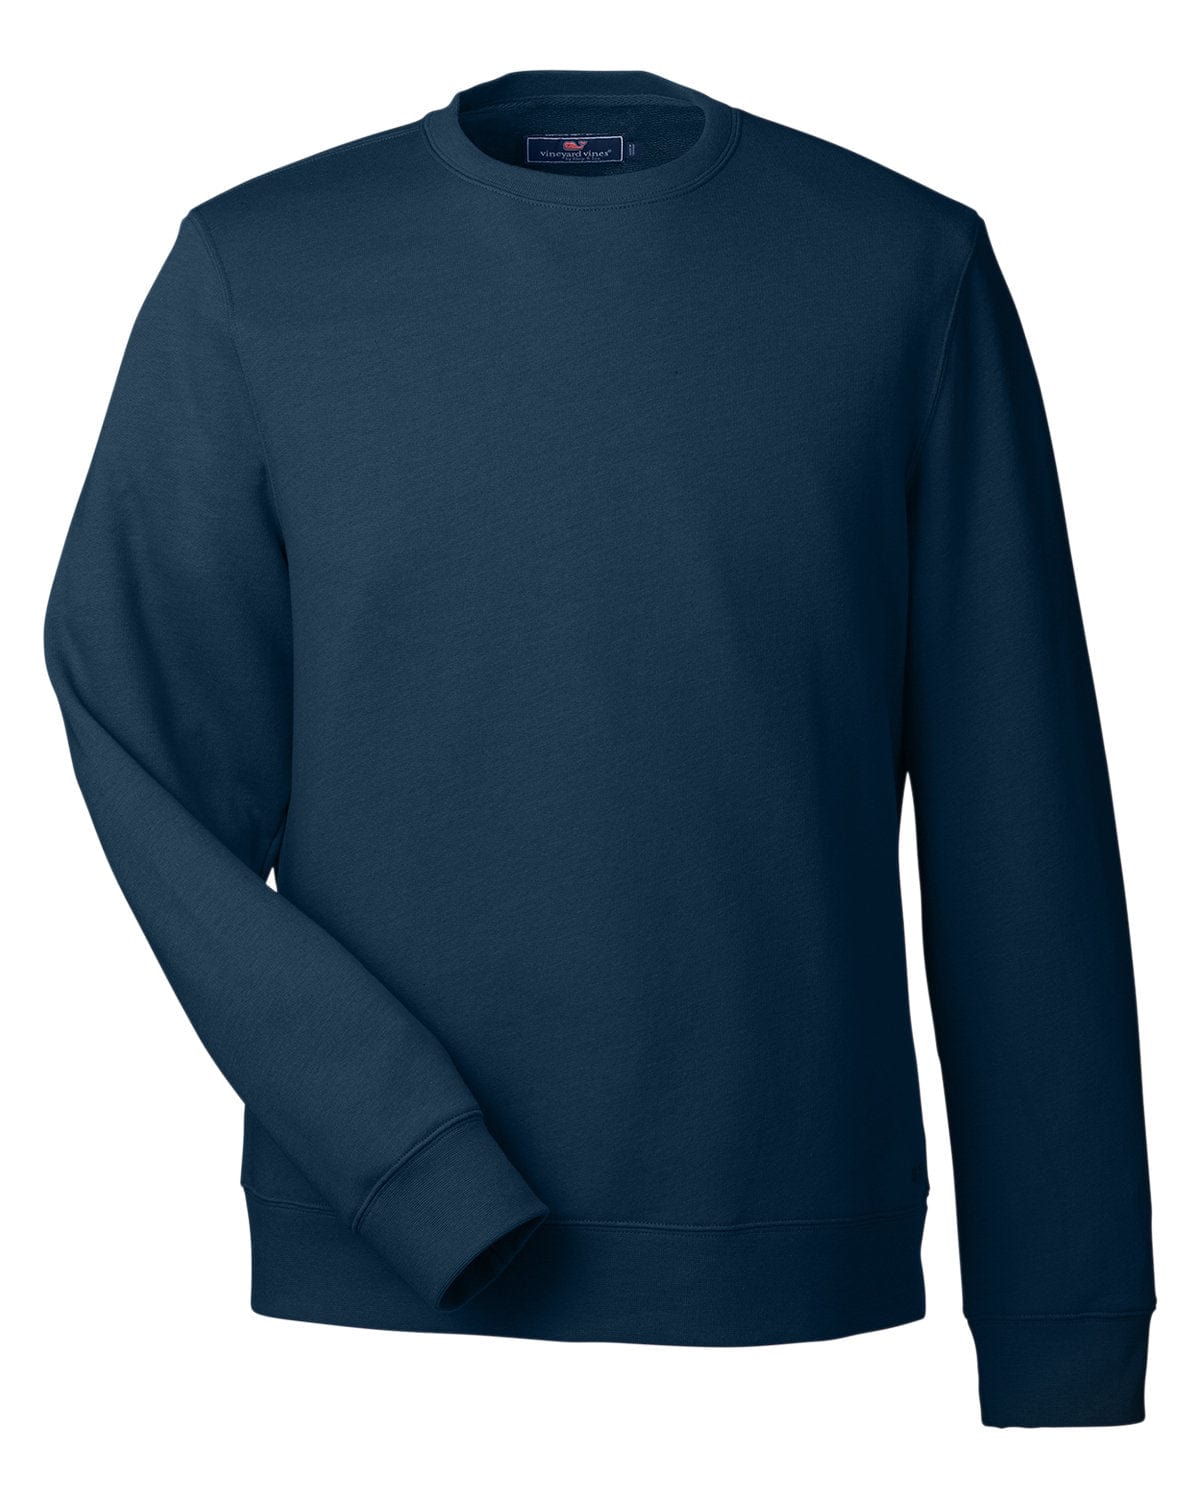 Vineyard Vines Men's Graphic Chest Patch Crewneck SS T-Shirt Vineyard Navy  $42[S] 